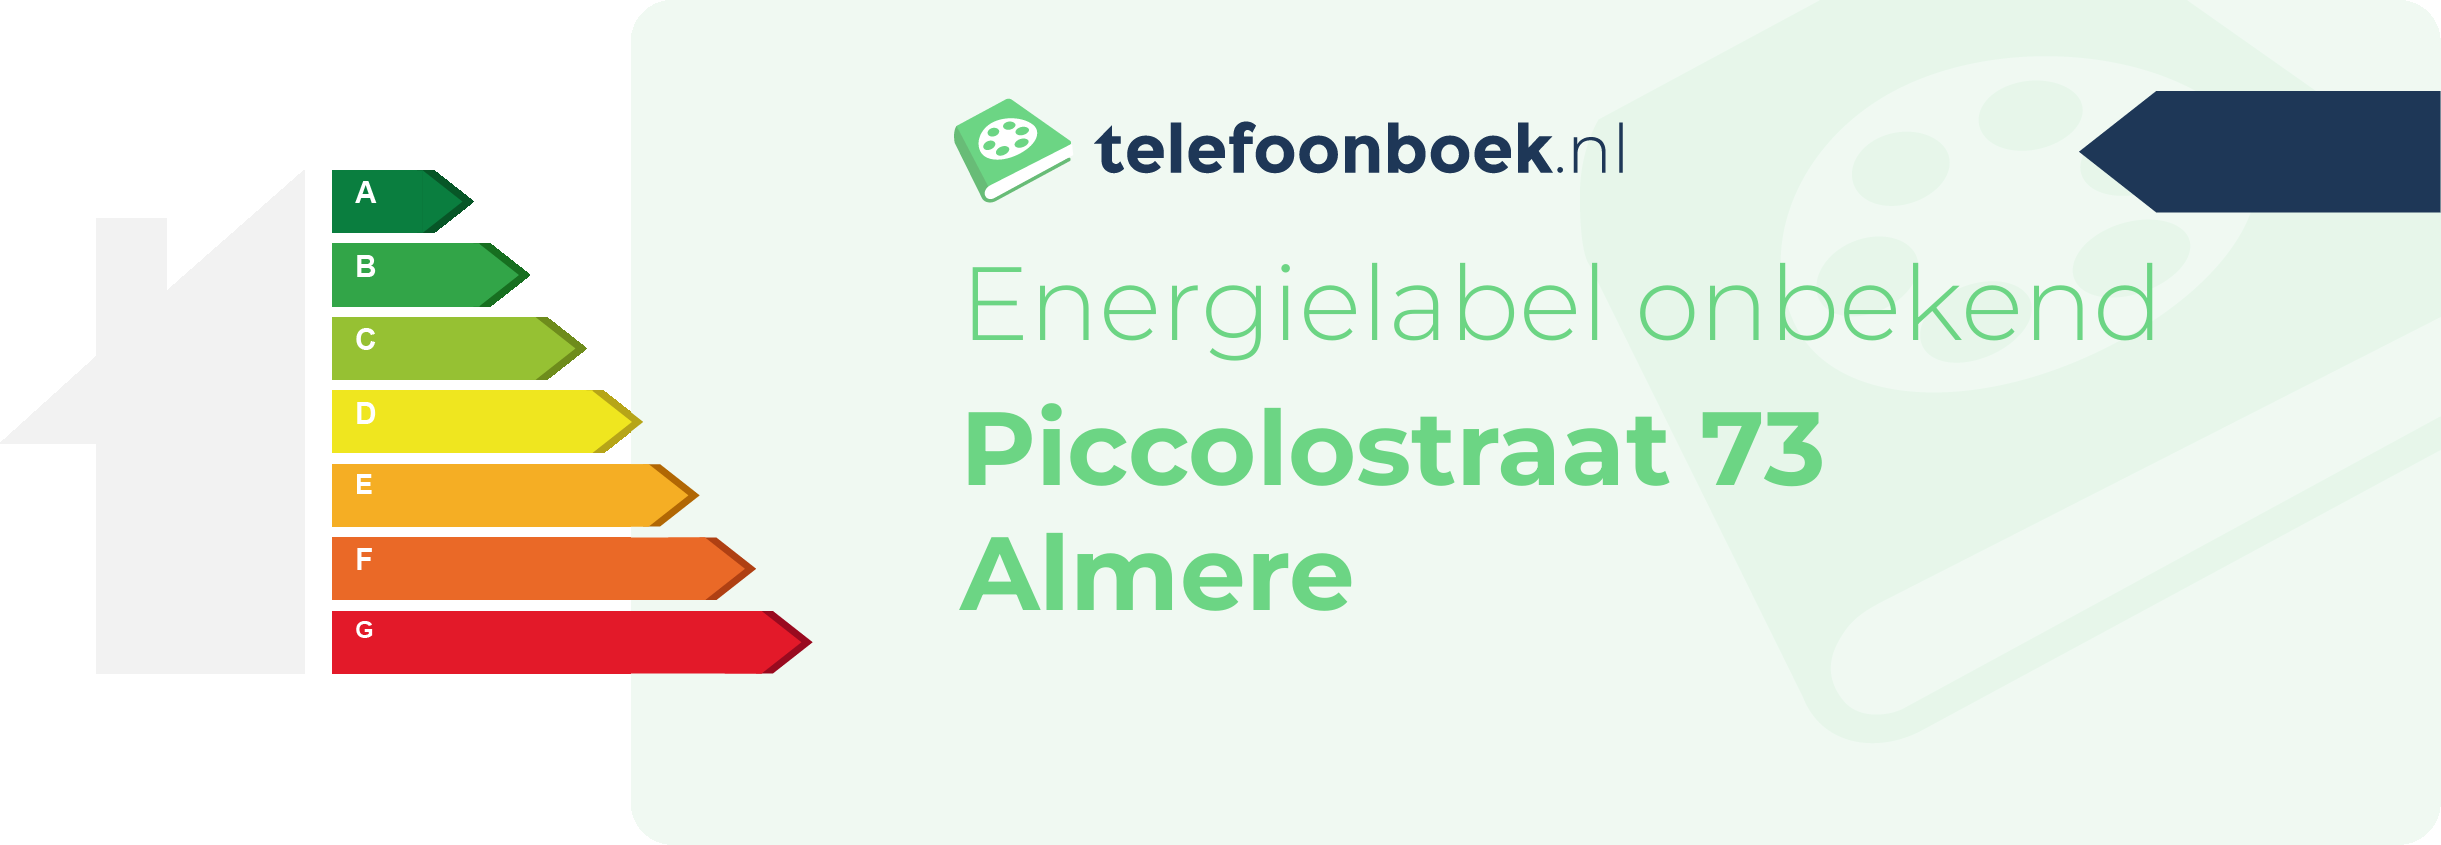 Energielabel Piccolostraat 73 Almere